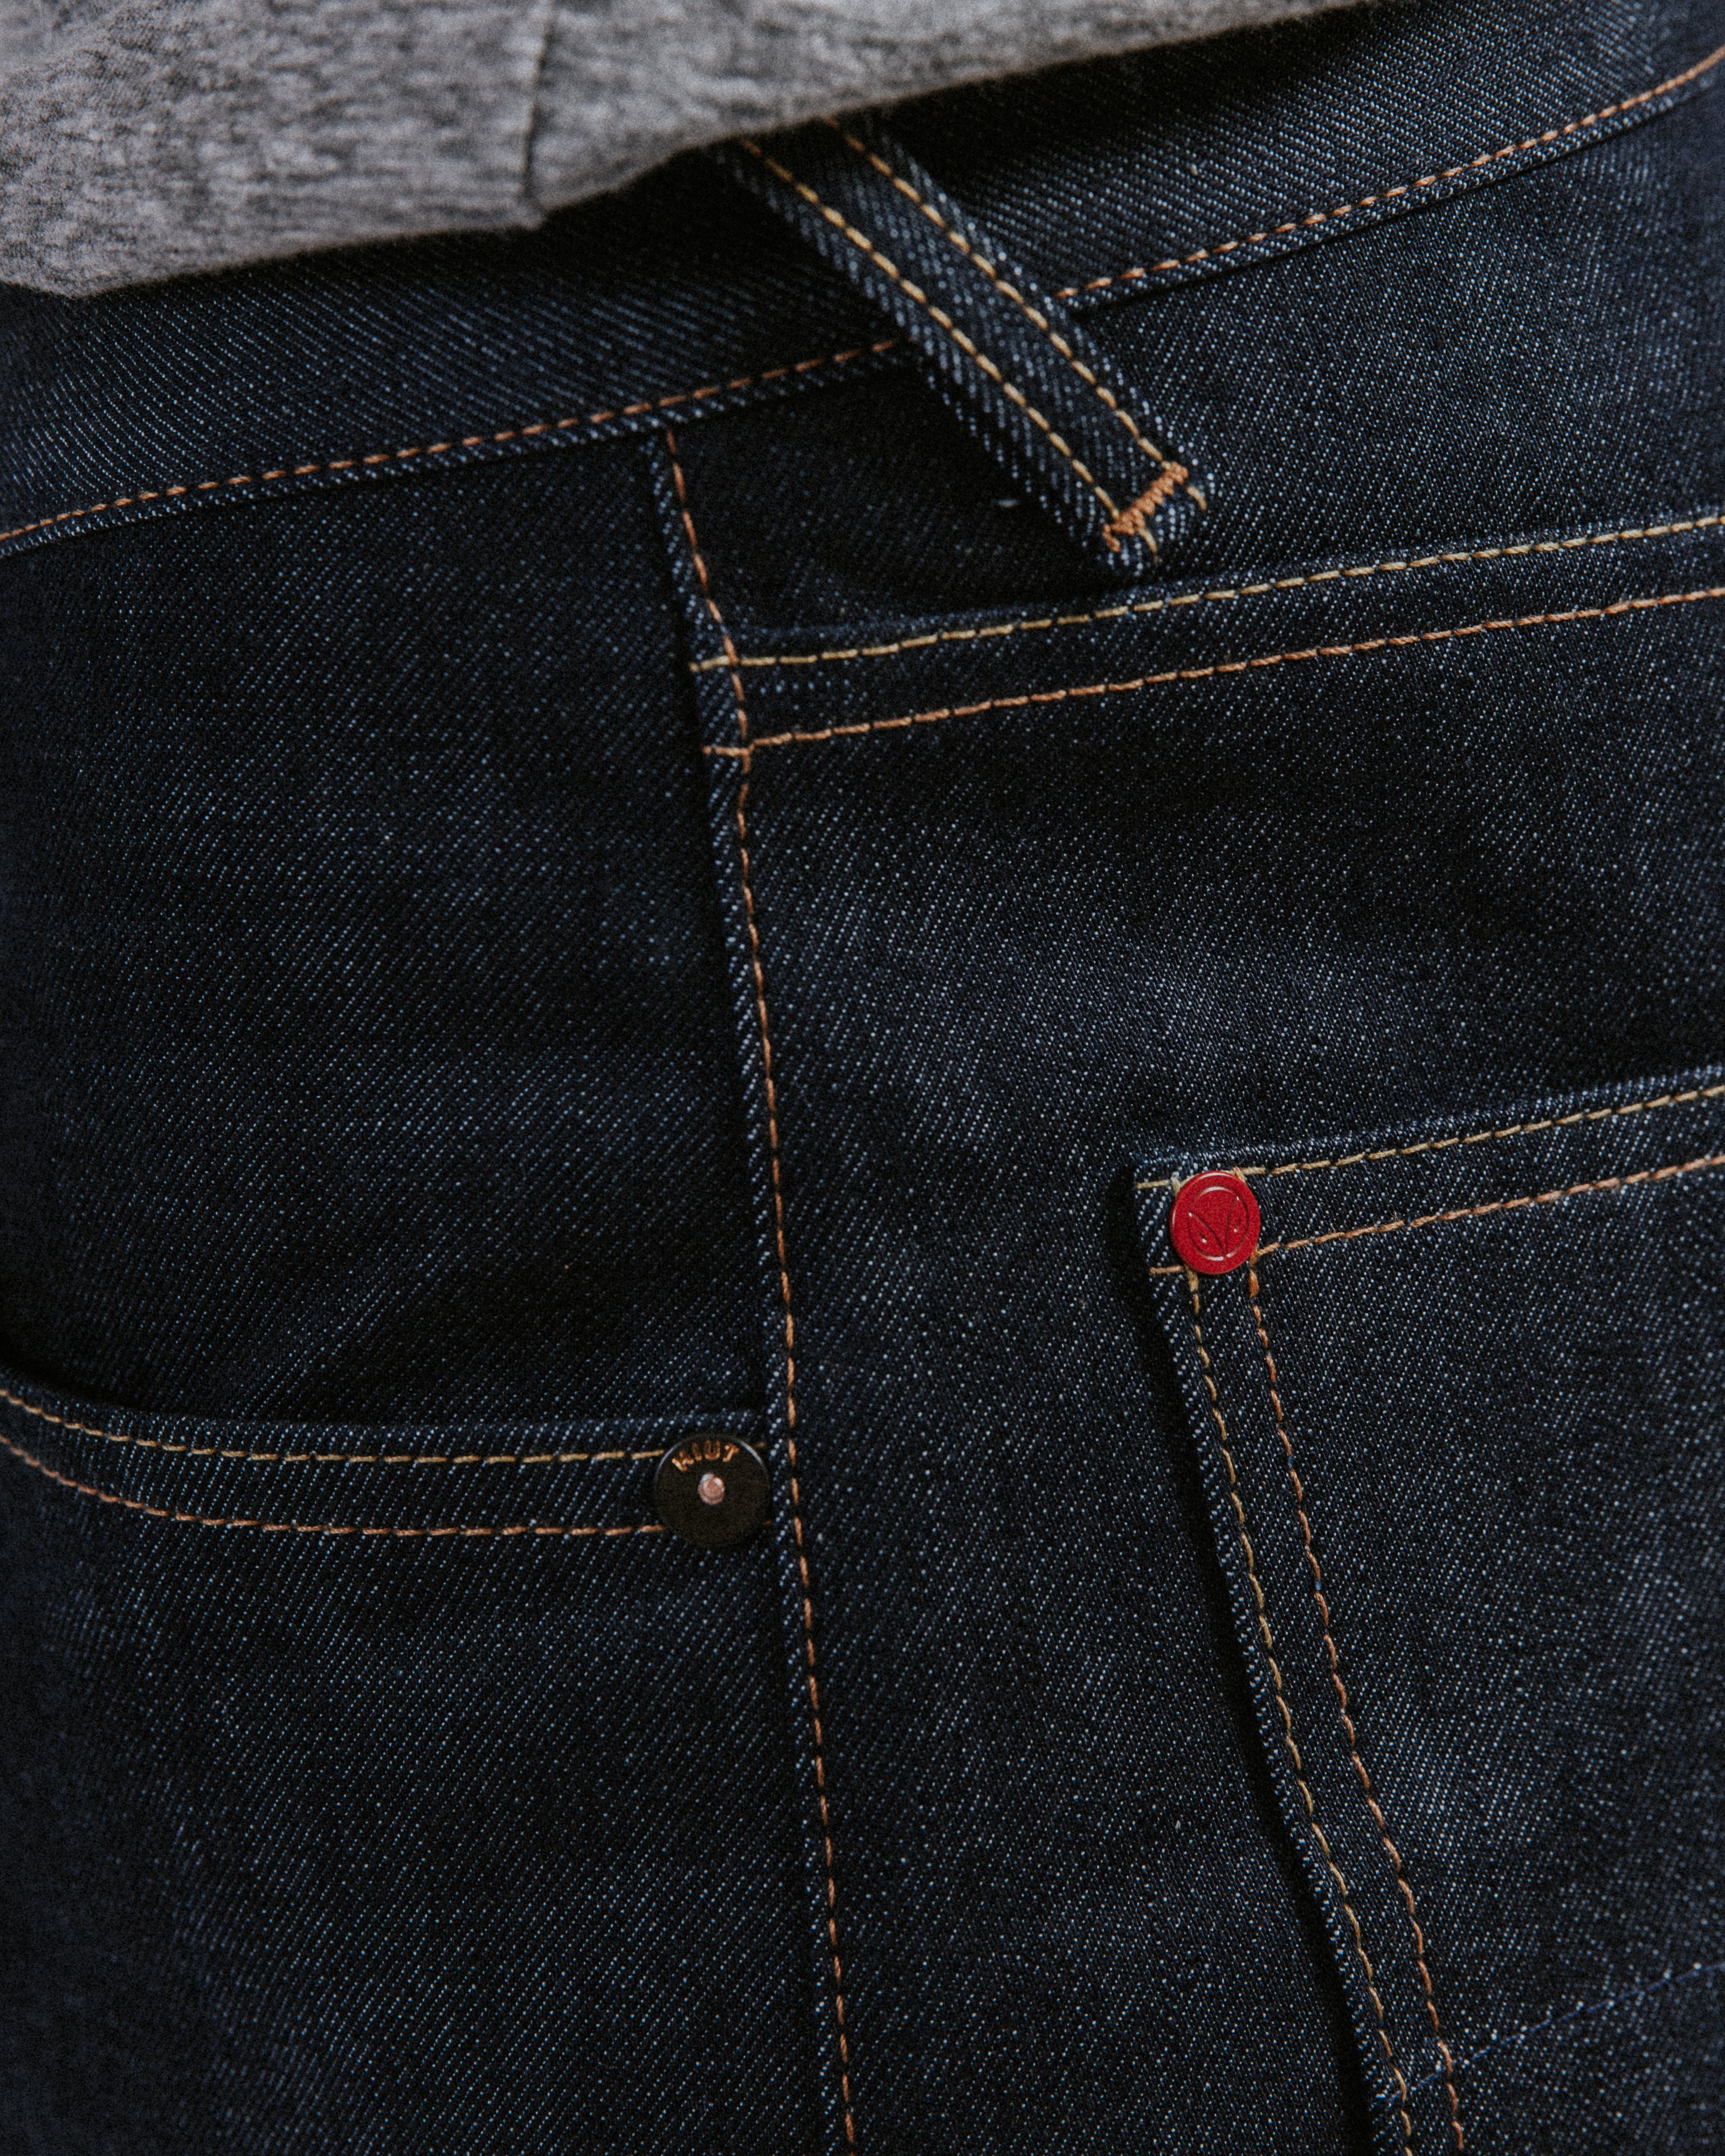 Hiut Denim Co: Shop Men's Luxury Hiut Jeans Made in the UK